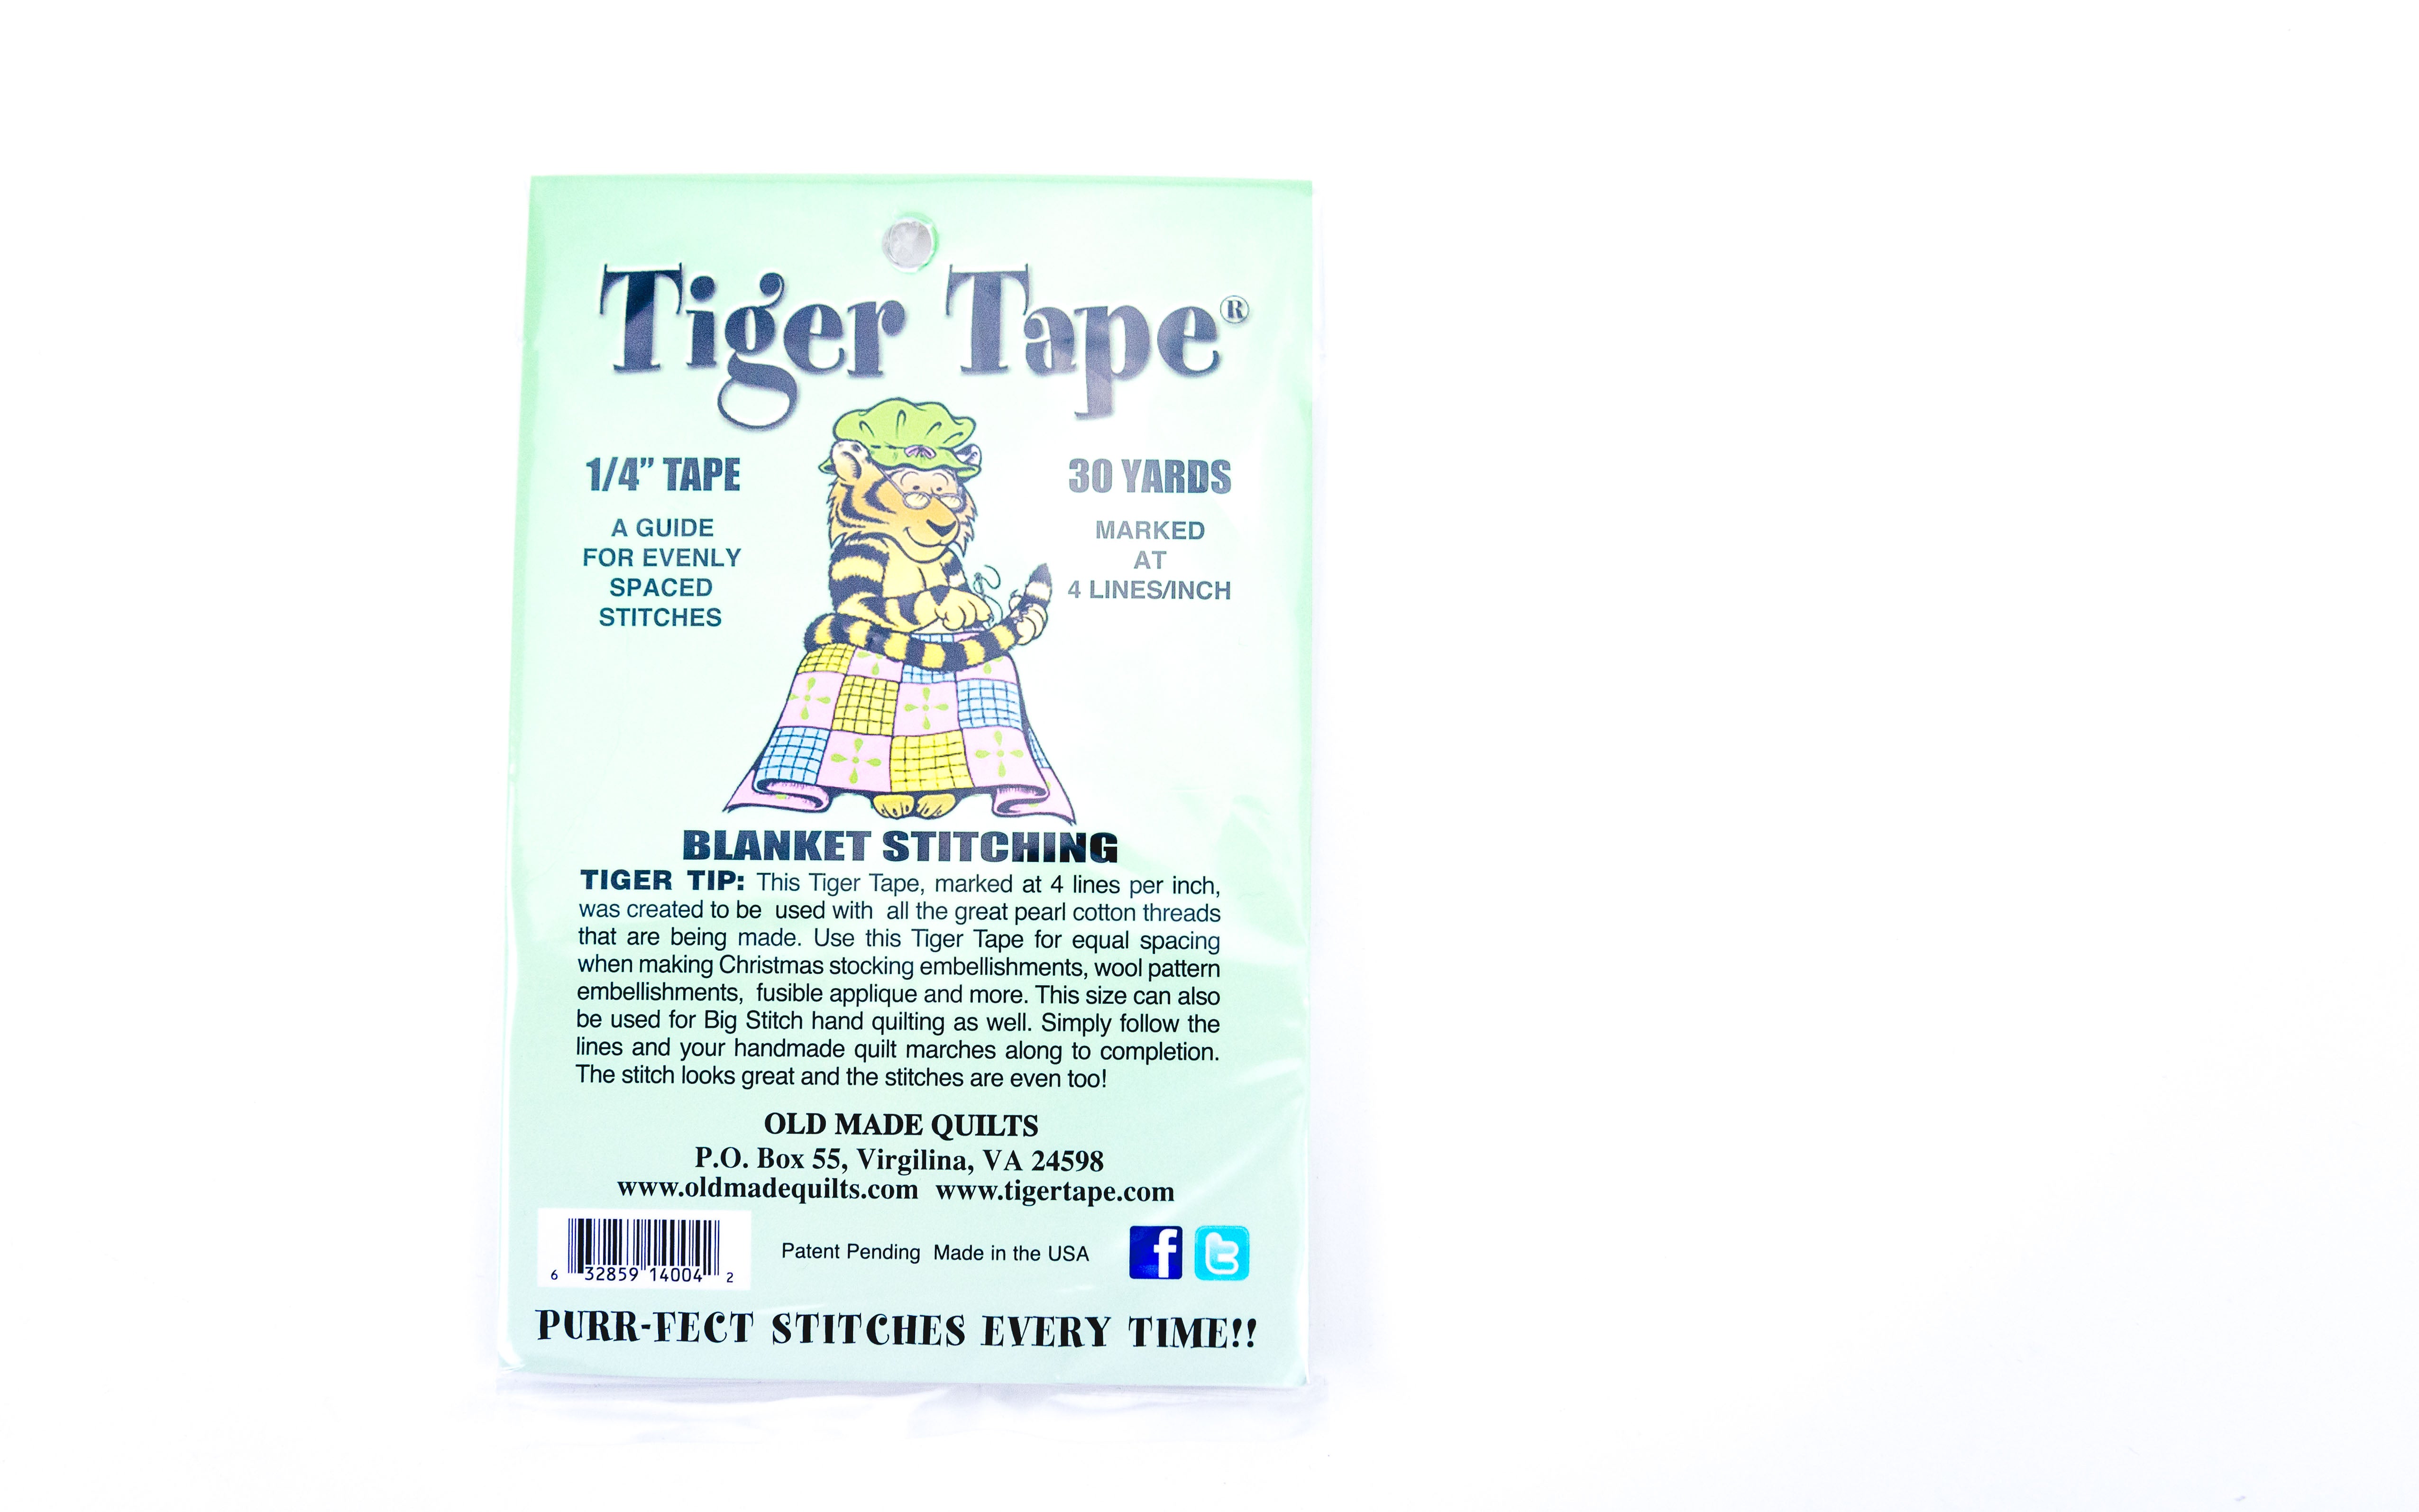 Tiger Tape - Big Stitch tt 1500 – River's Edge Antiques and Quilt Loft